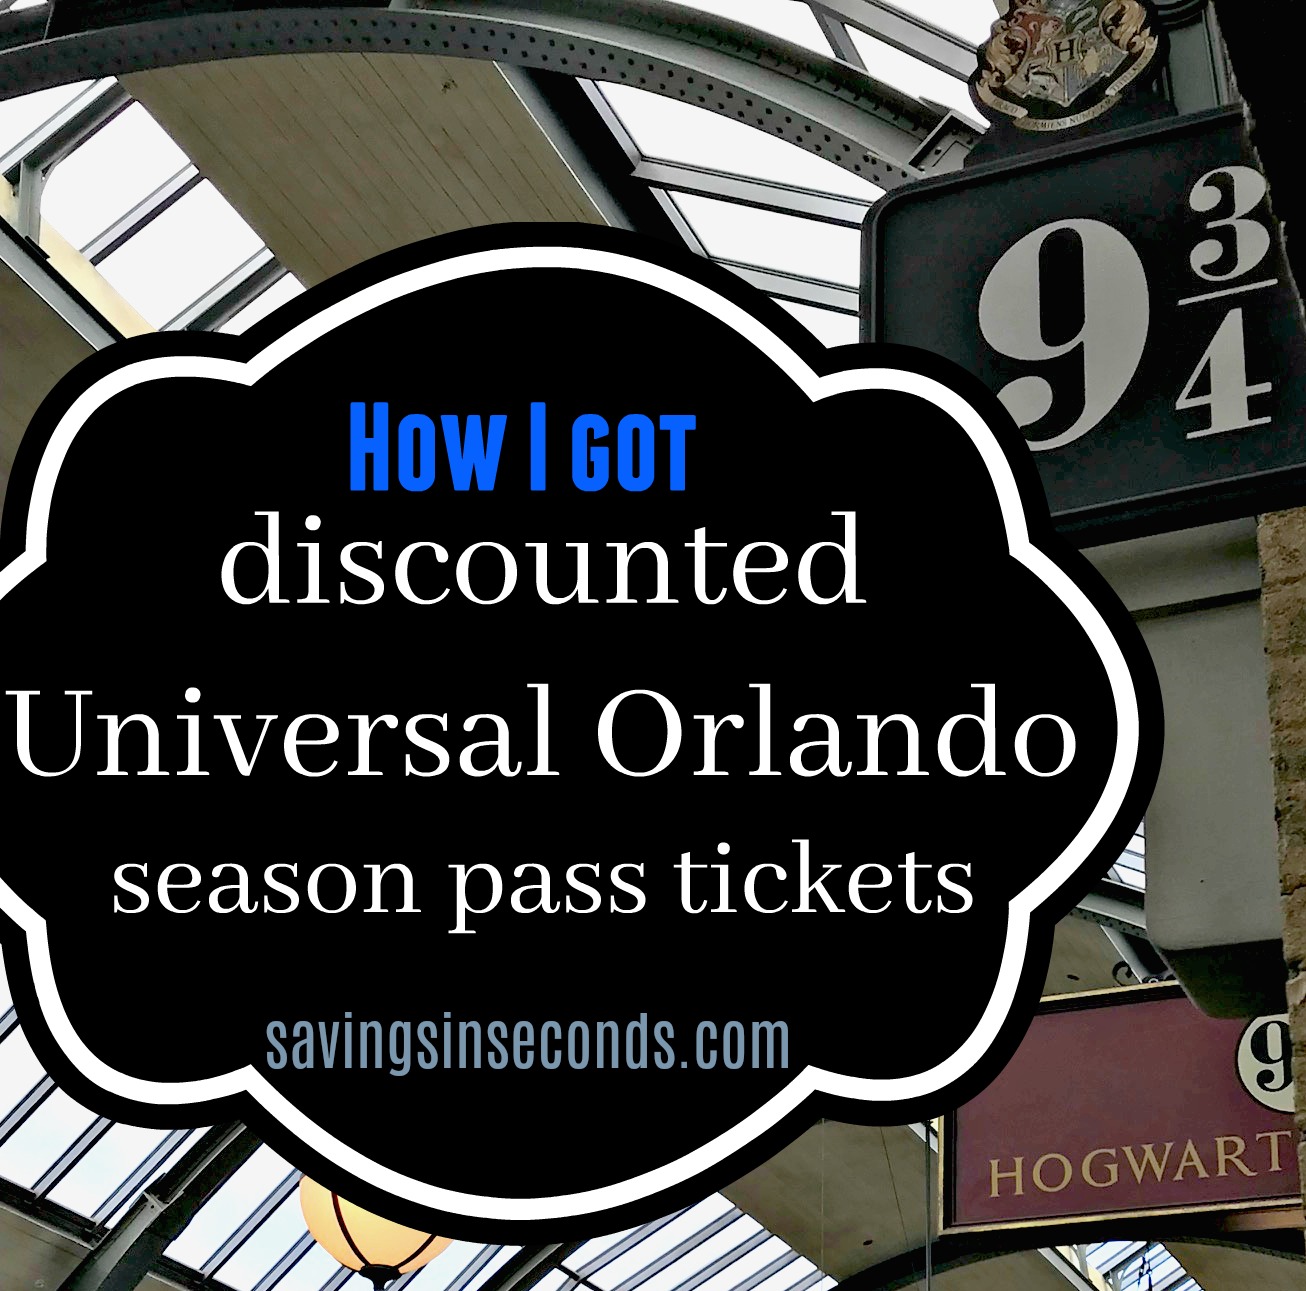 How we got discounted Universal Studios Orlando season pass tickets